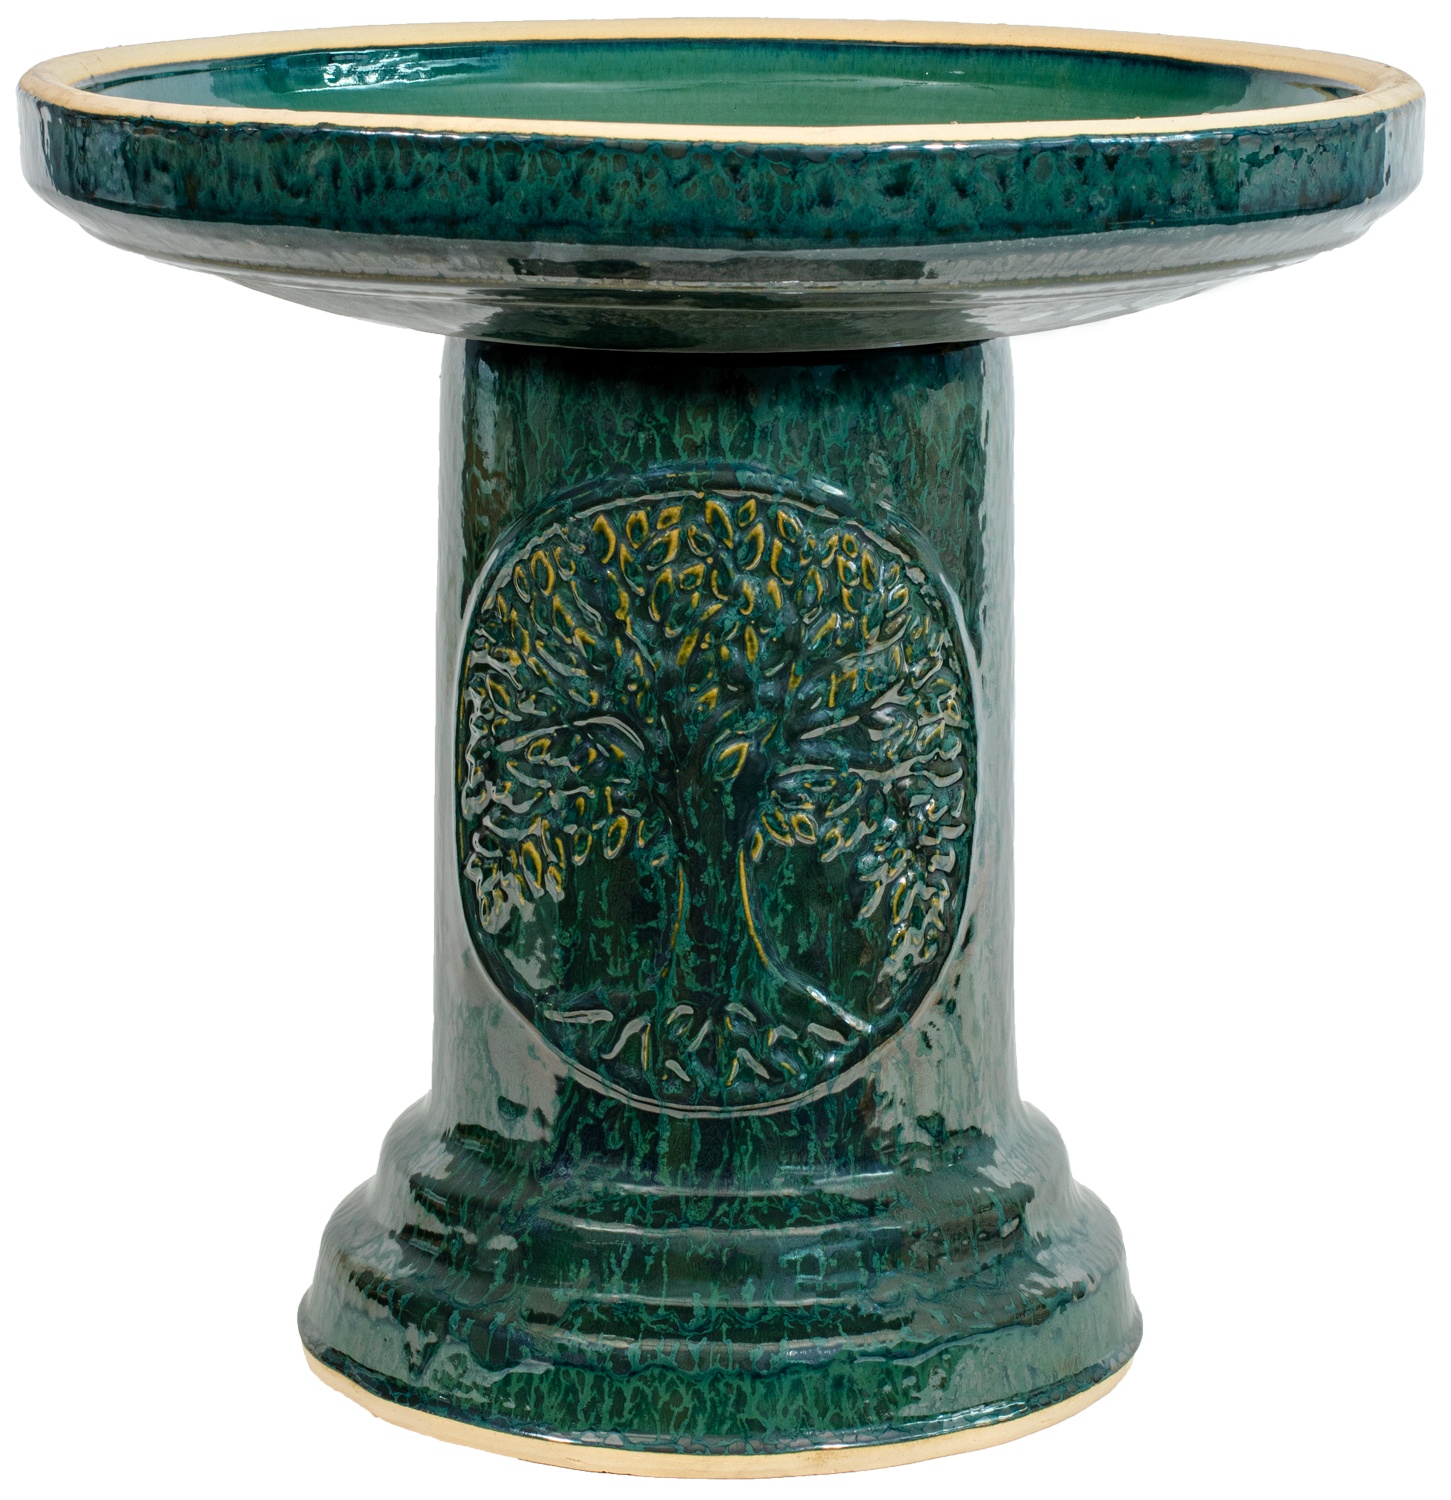 ceramic dark green birdbath set with Tree of Life motif